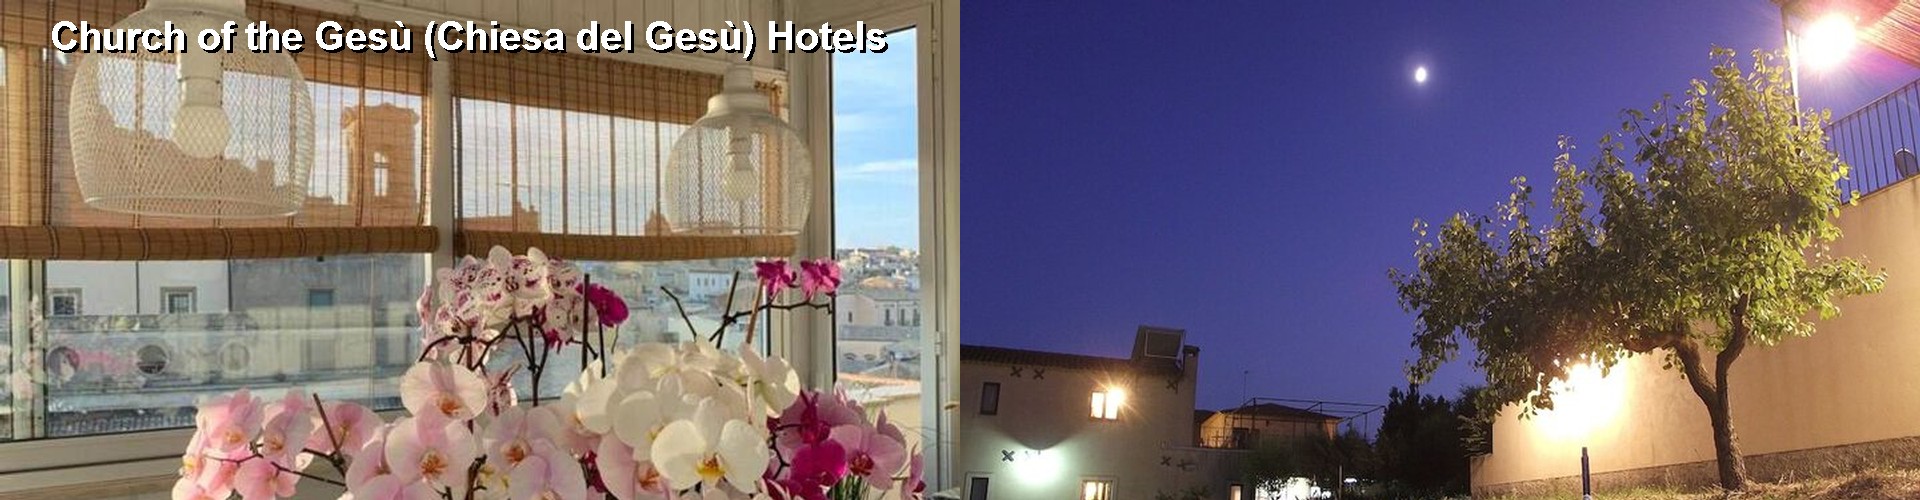 5 Best Hotels near Church of the Gesù (Chiesa del Gesù)